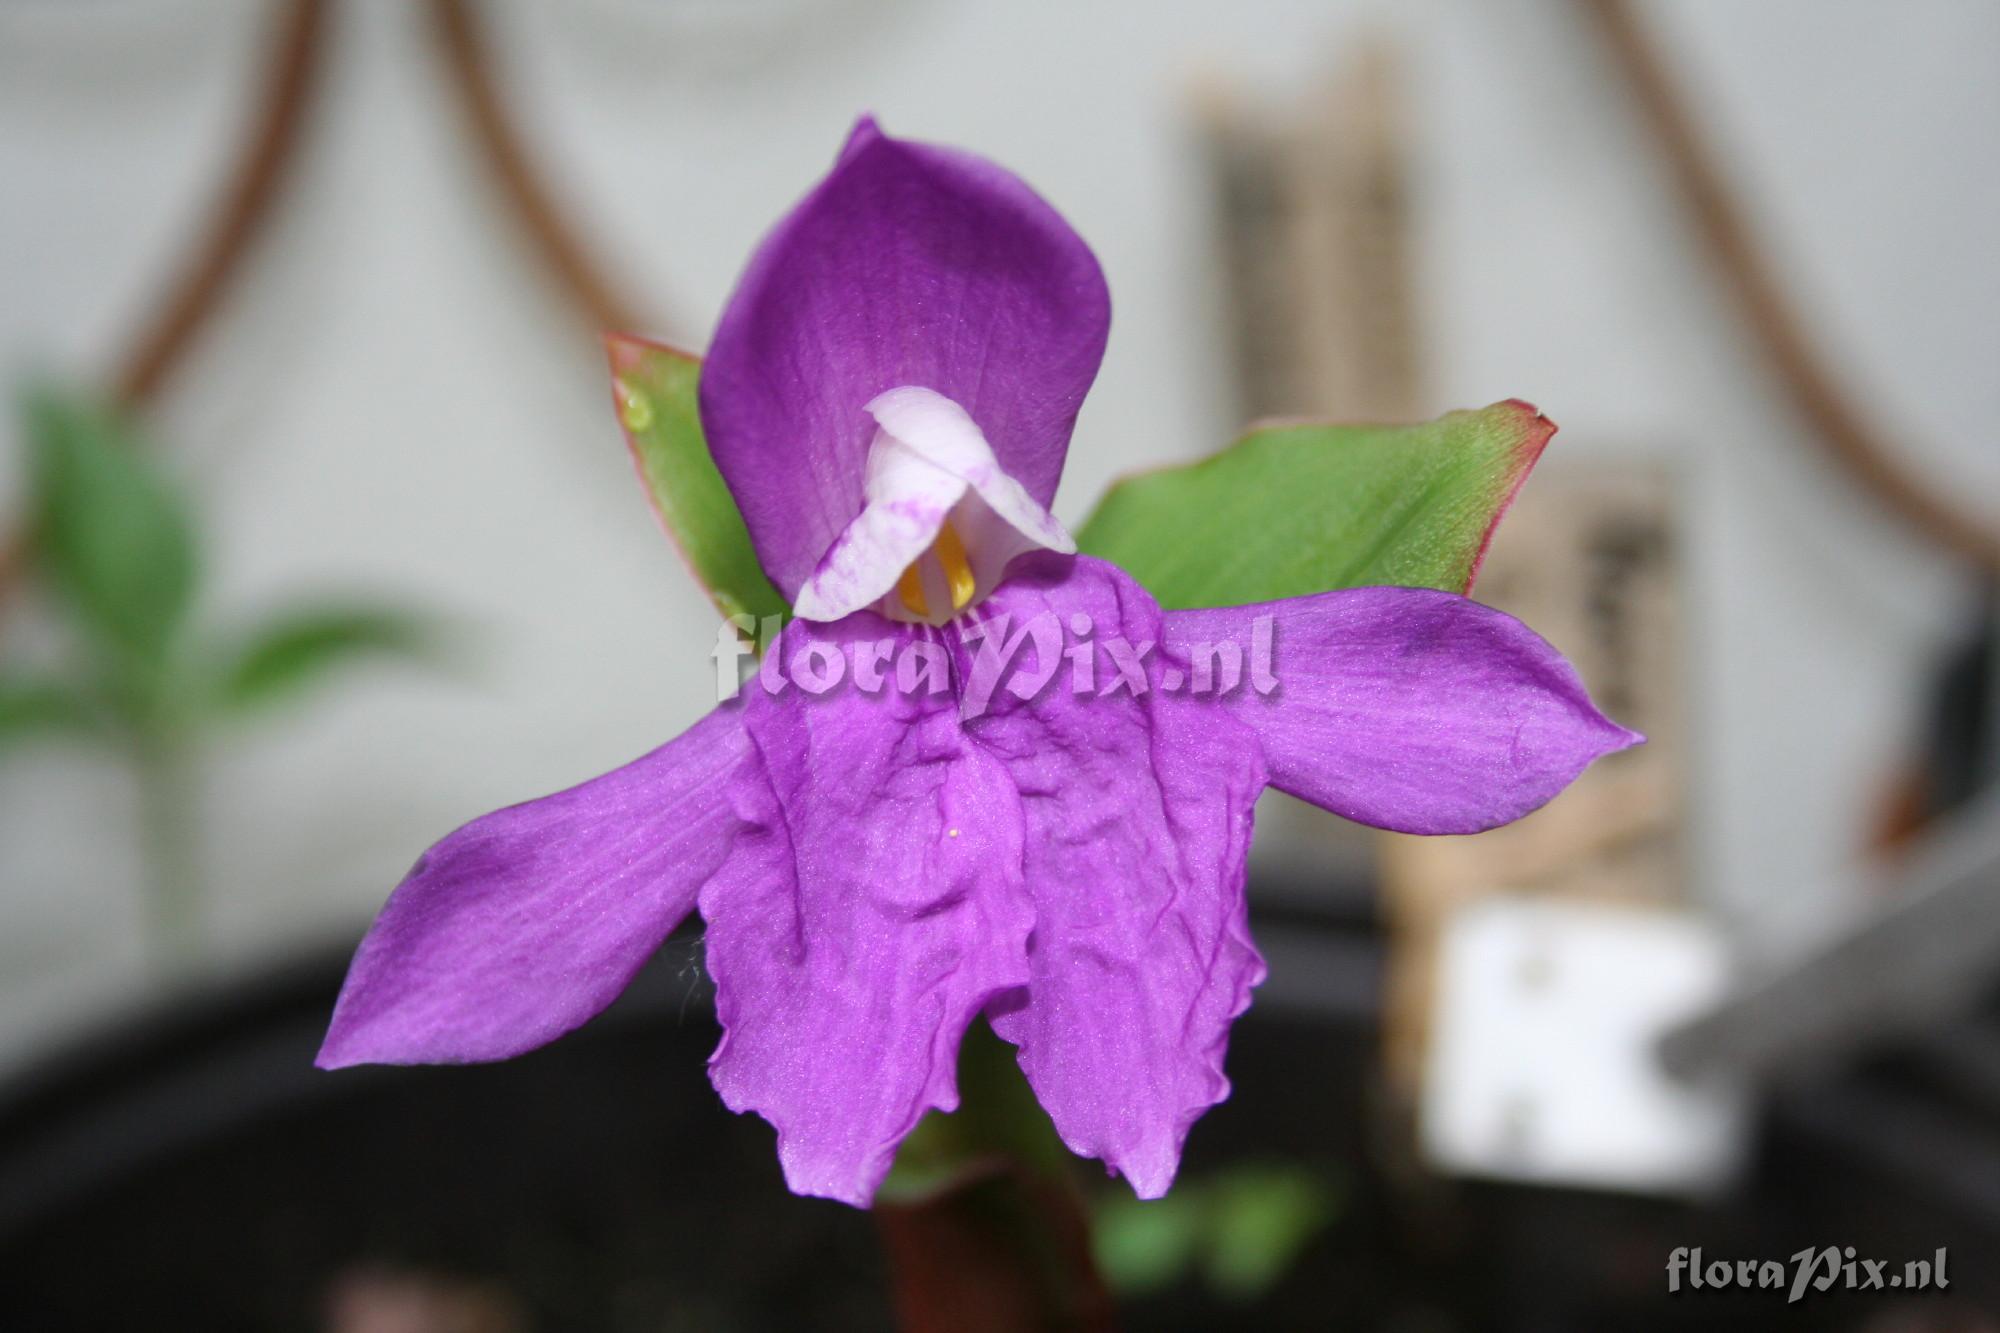 Roscoea forrestii - Purple form